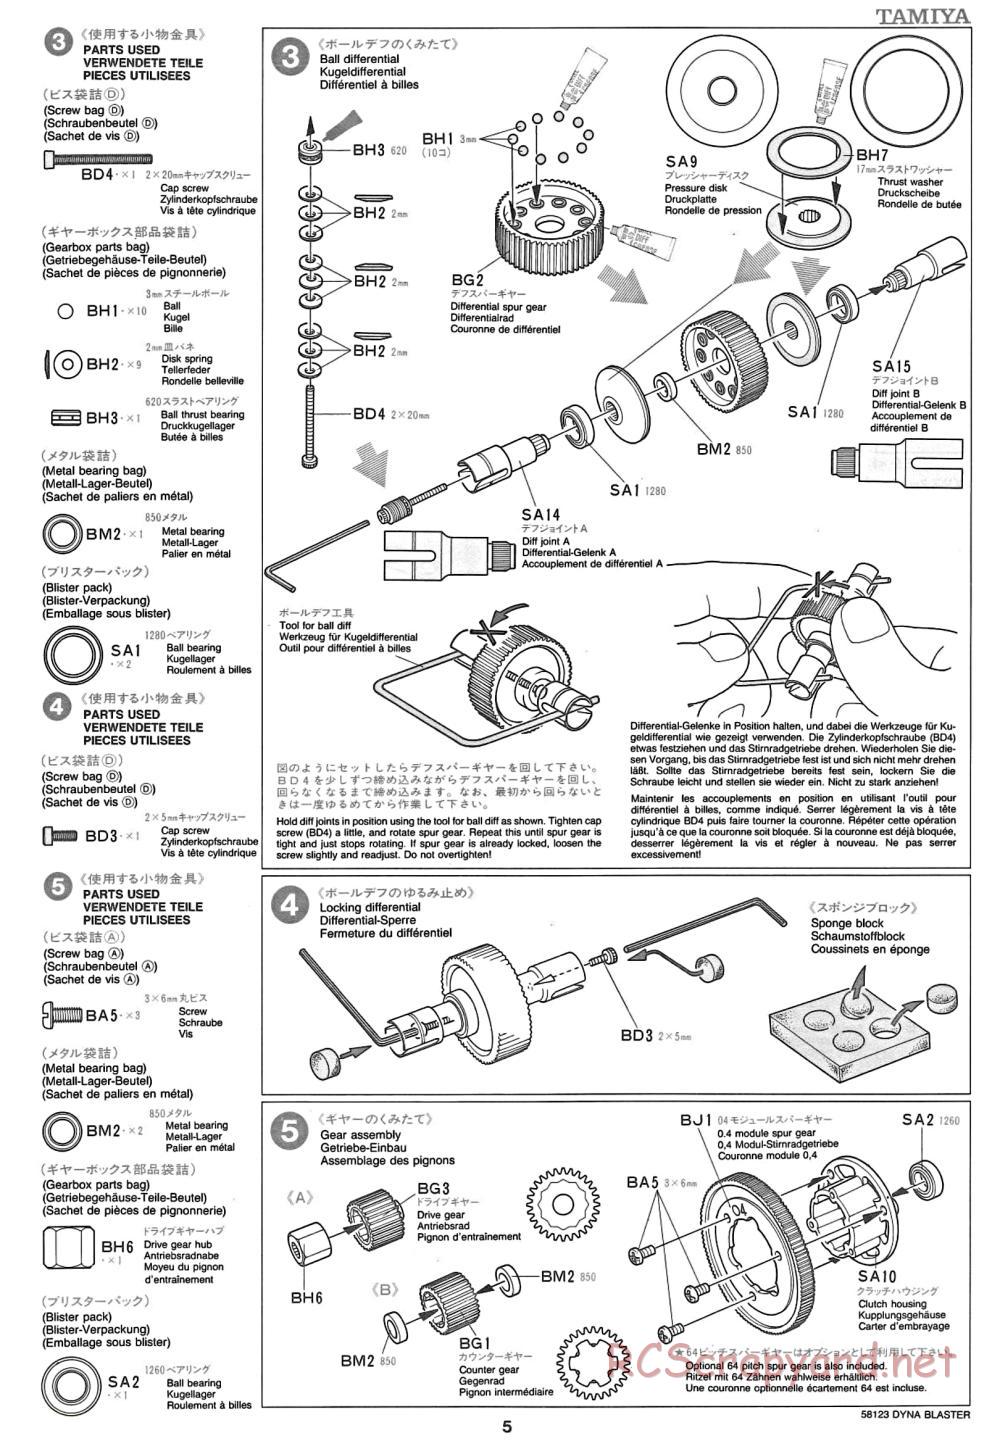 Tamiya - Dyna Blaster Chassis - Manual - Page 5